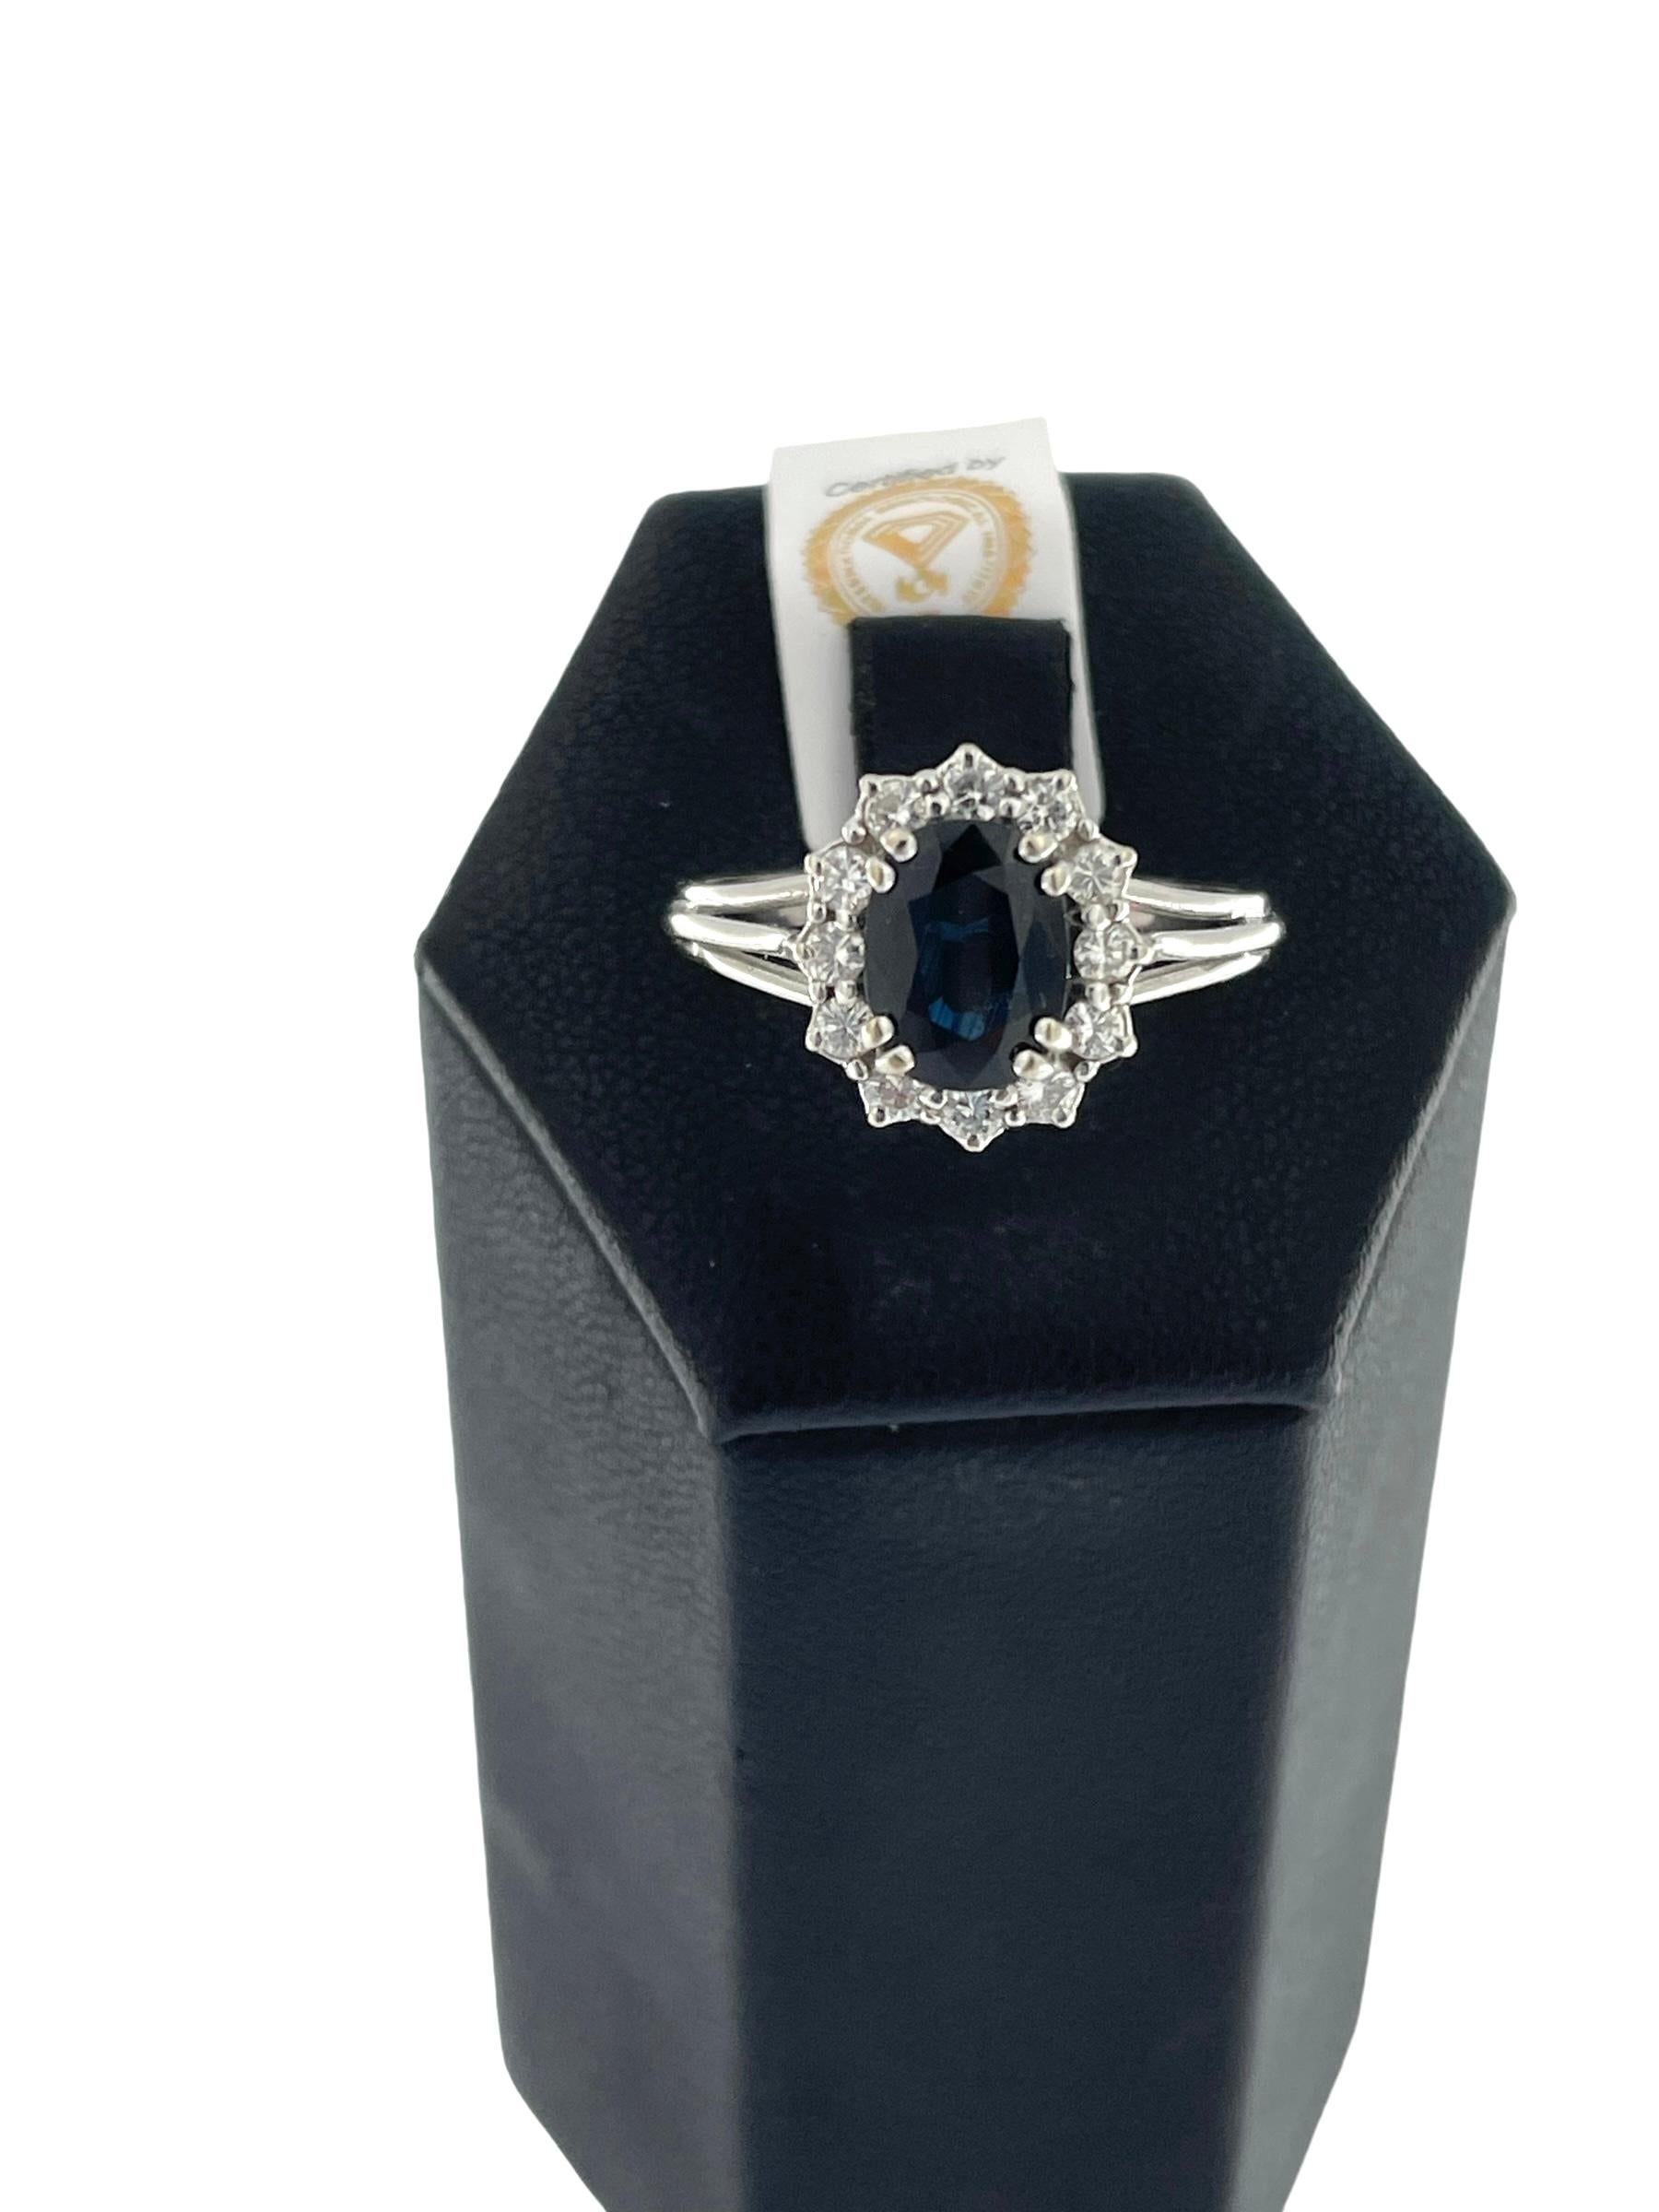 IGI Certified White Gold Diamonds and Sapphire Classic Ring  In Fair Condition For Sale In Esch sur Alzette, Esch-sur-Alzette